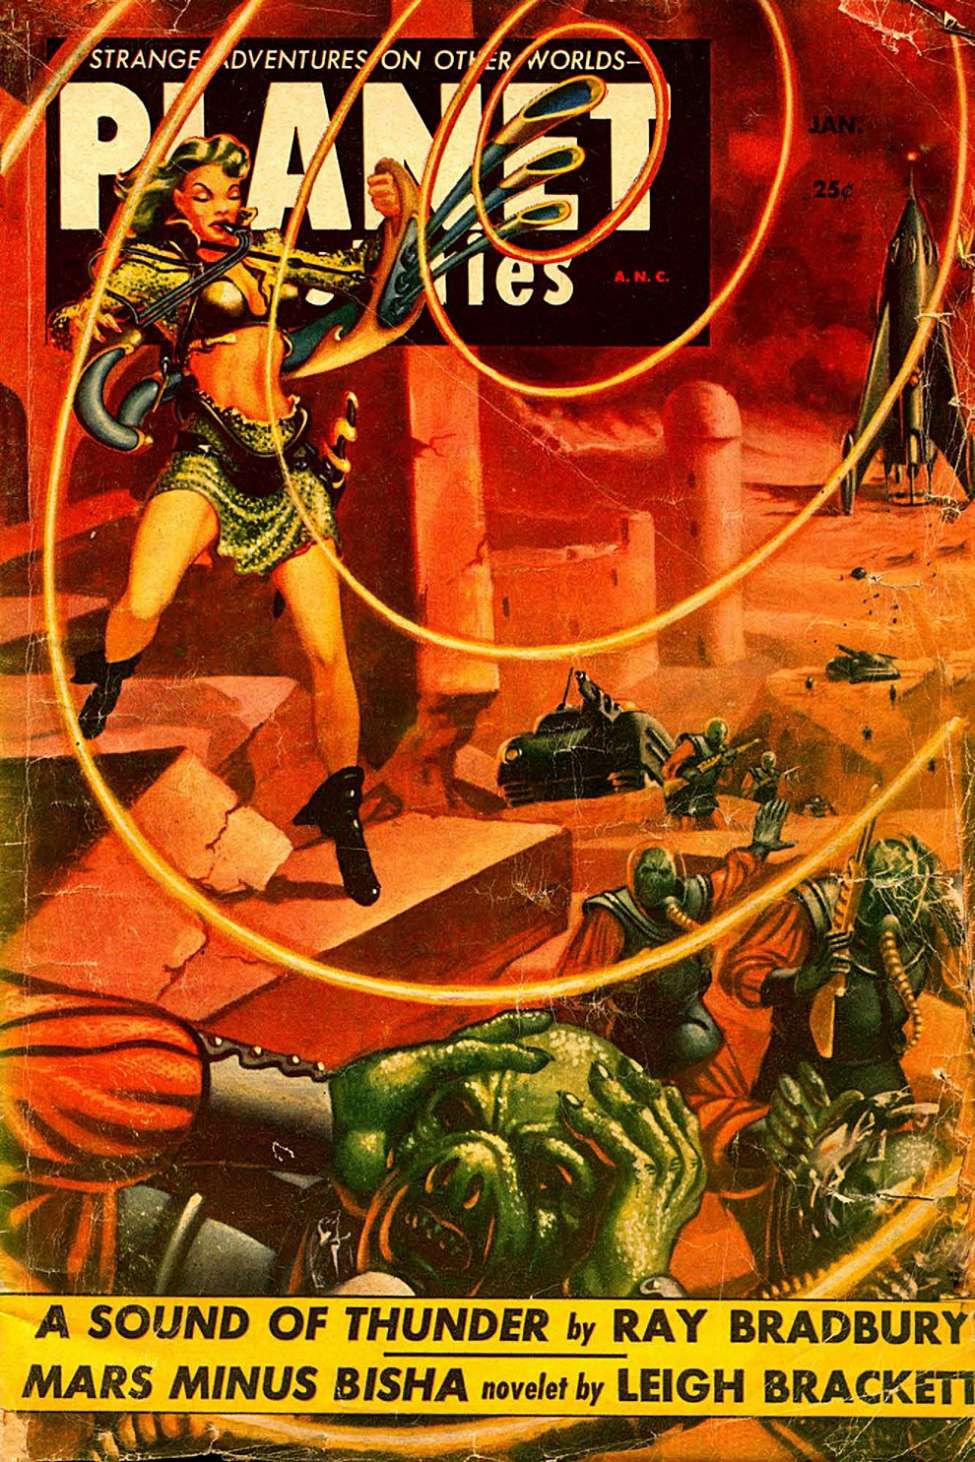 Comic Book Cover For Planet Stories v6 4 - A Sound of Thunder - Ray Bradbury